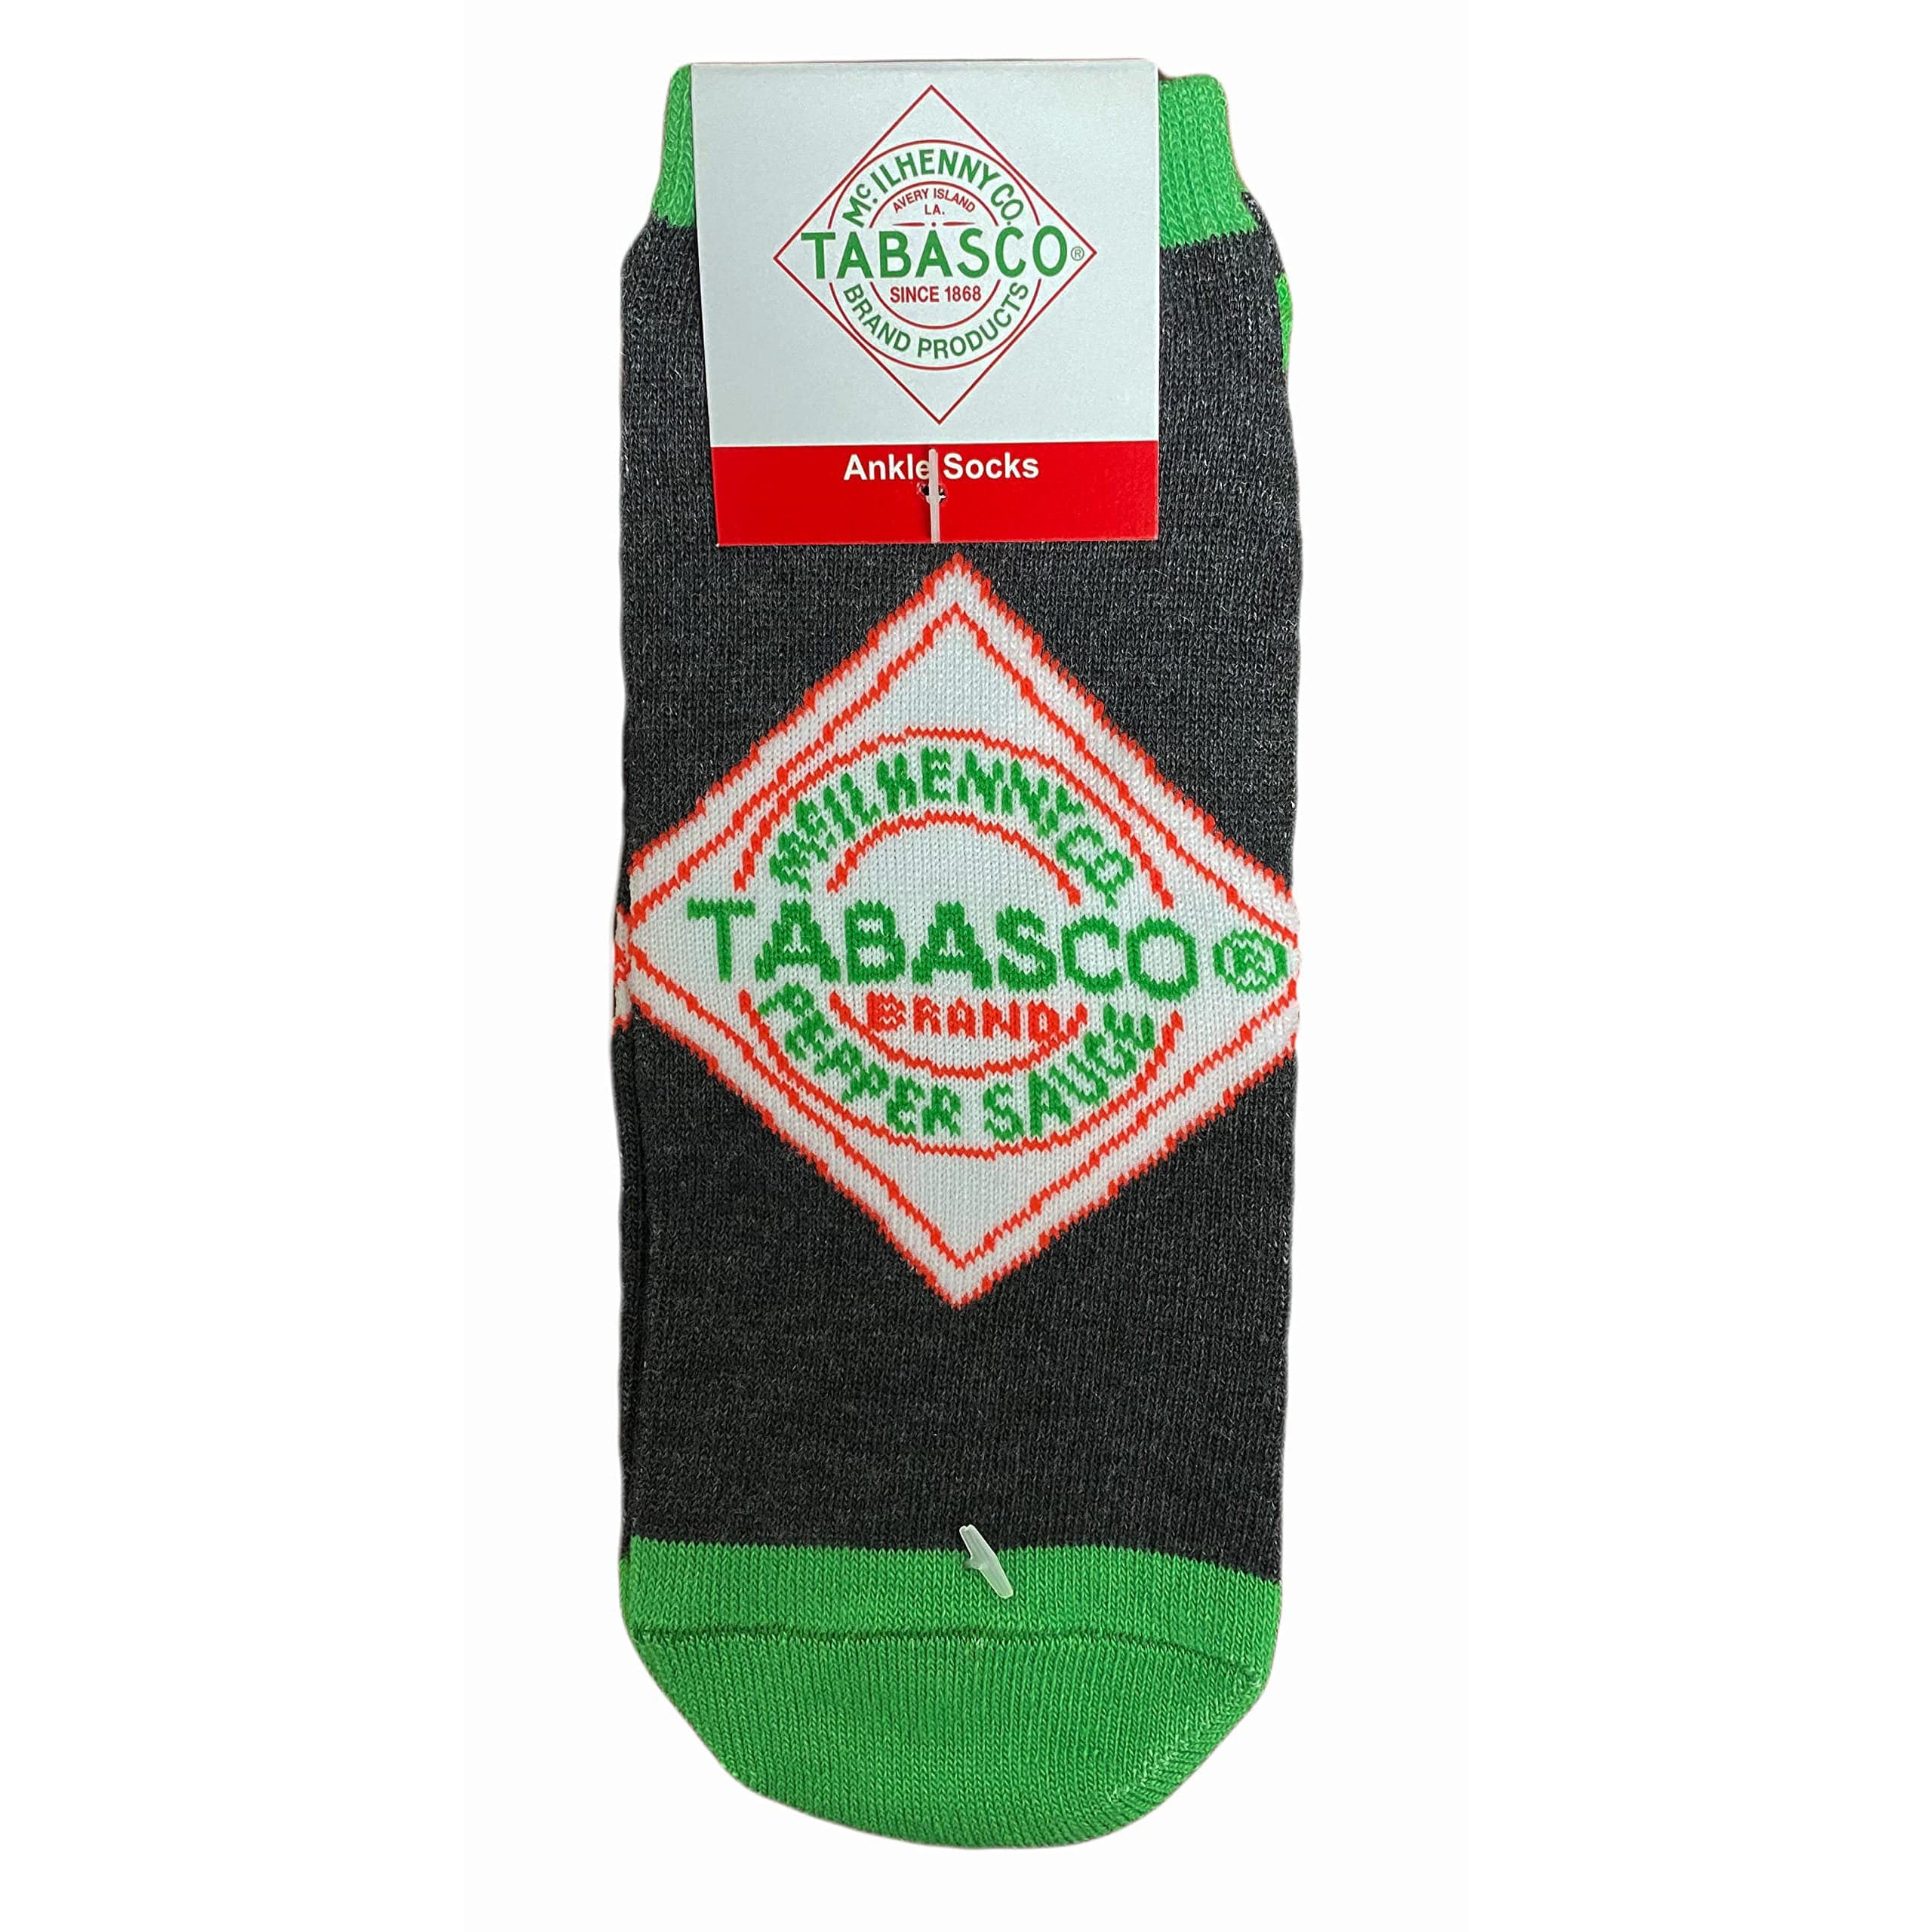 Tabasco Black and Green Ankle Socks